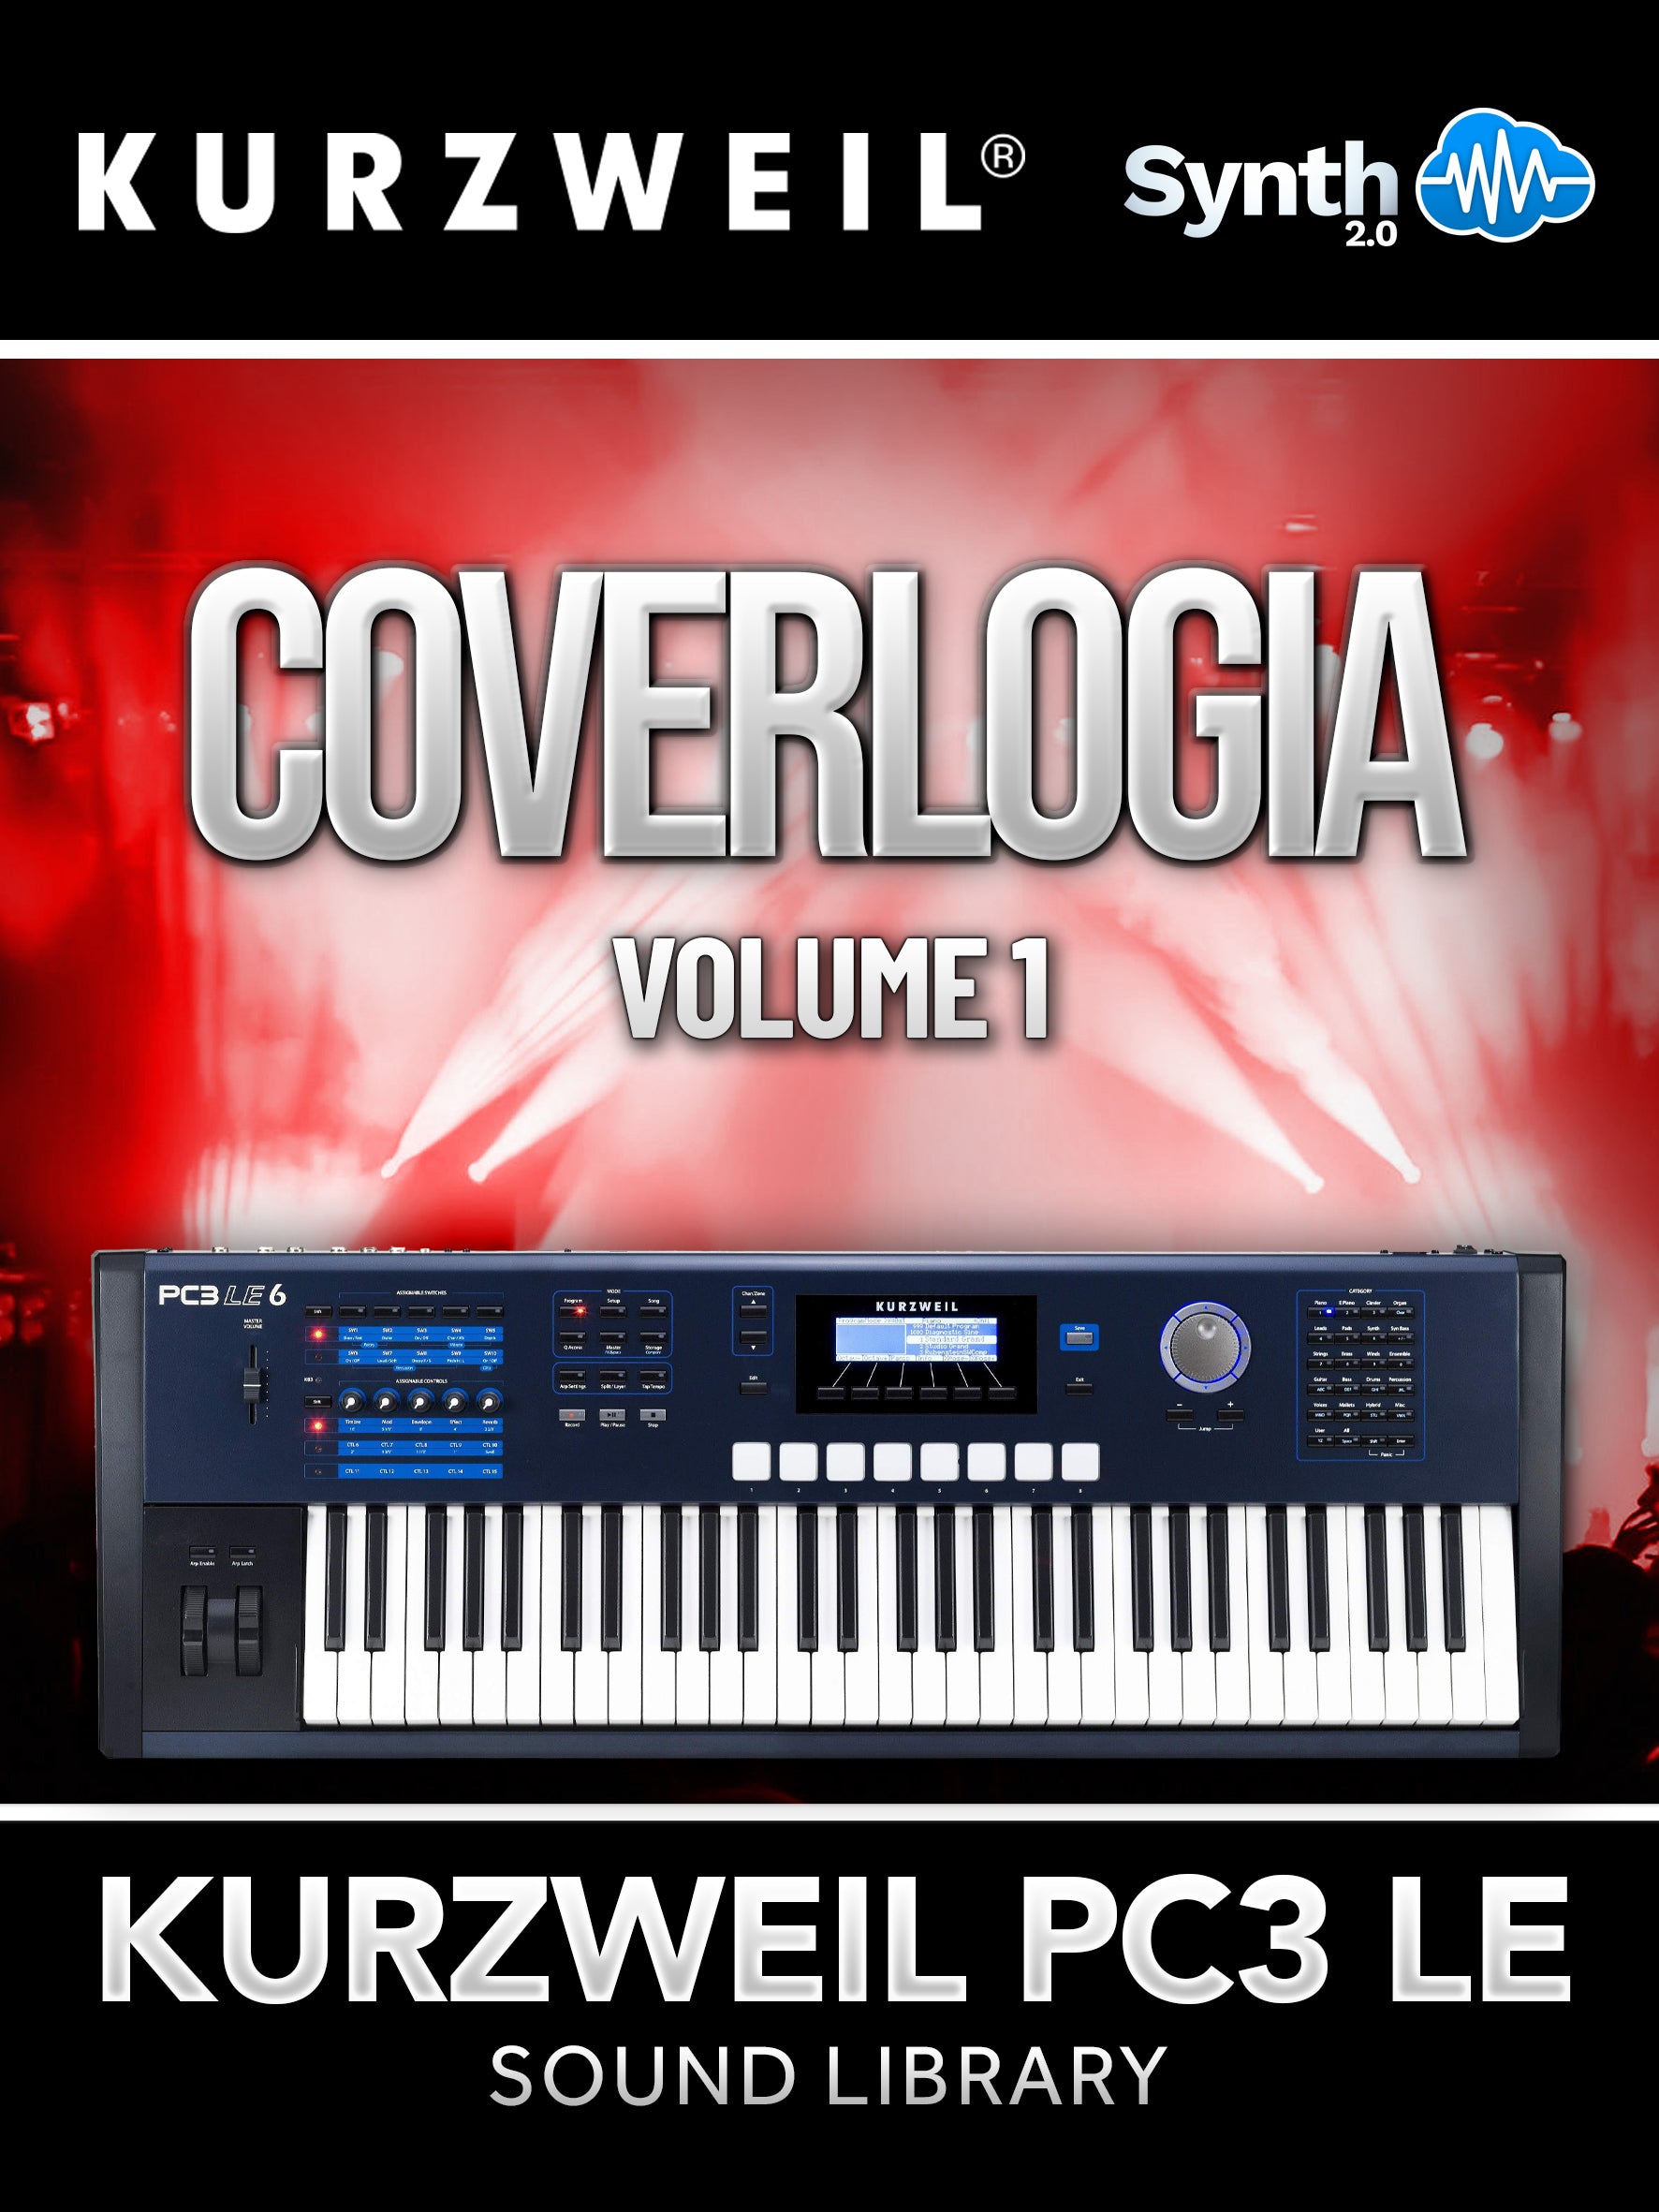 LDX229 - Coverlogia V1 - Kurzweil PC3 LE ( 16 presets )